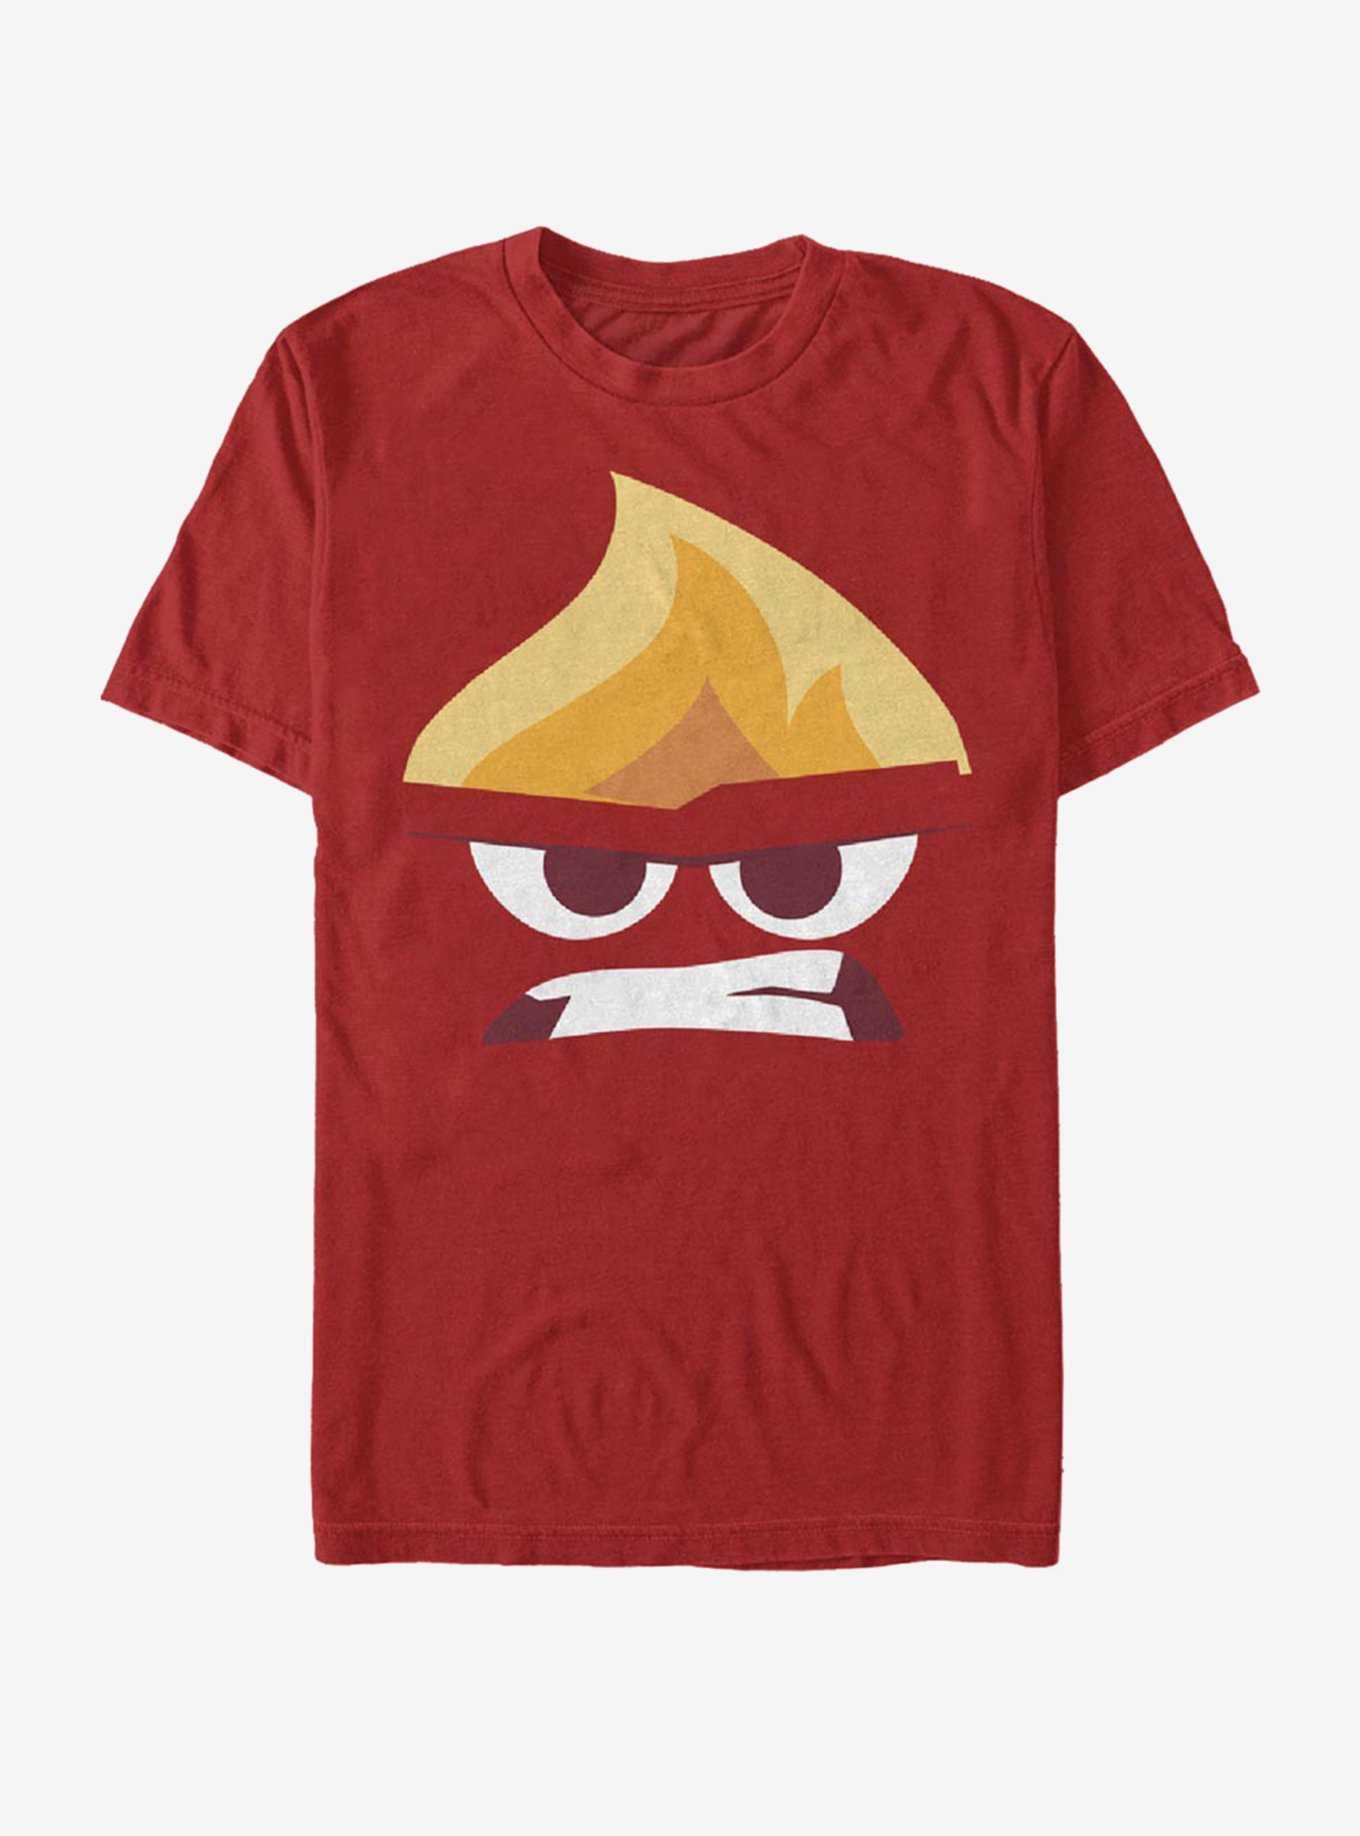 Disney Pixar Inside Out Angry Face T-Shirt, , hi-res